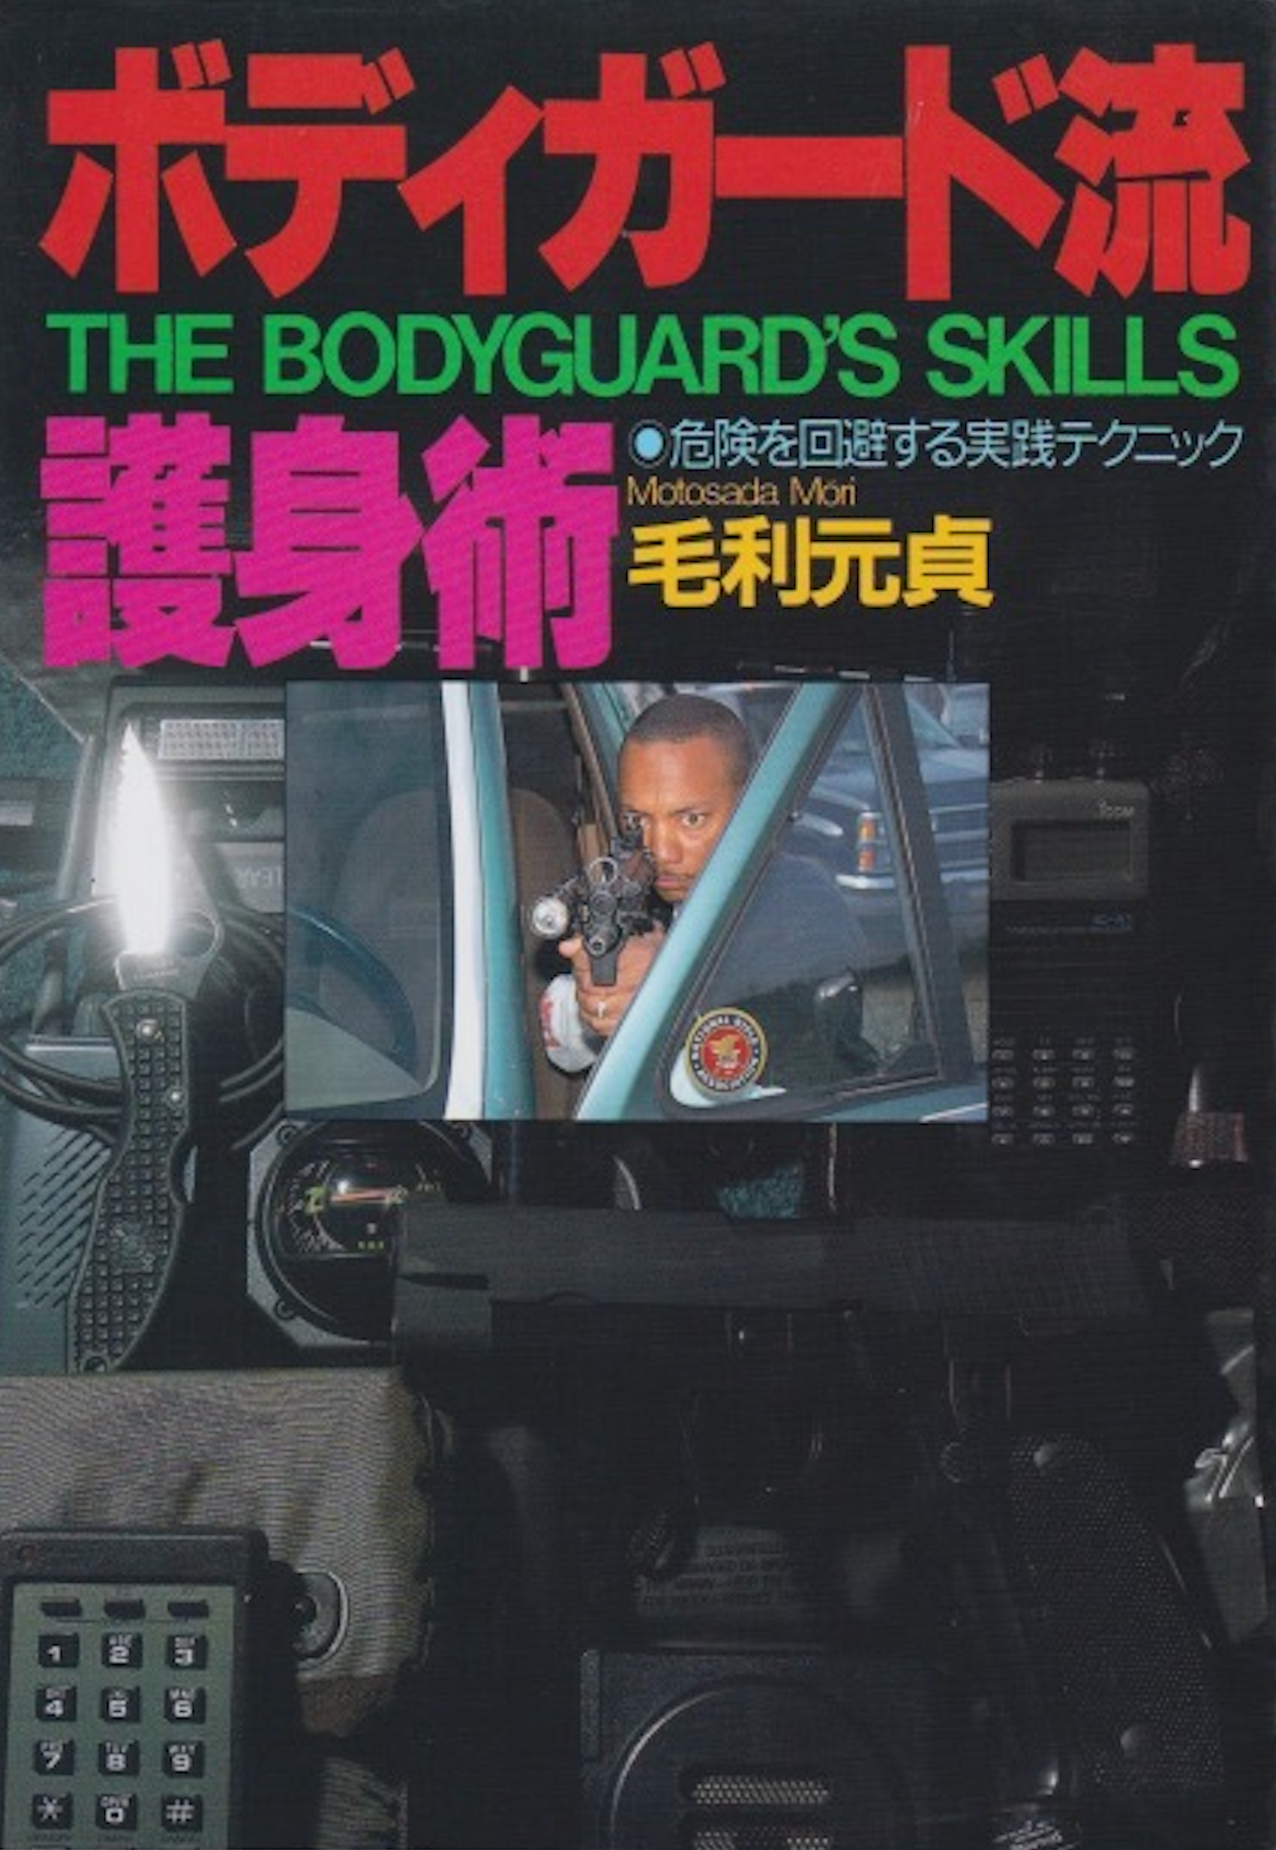 The Bodyguard's Skills Book by Motosada Mori (Preowned)